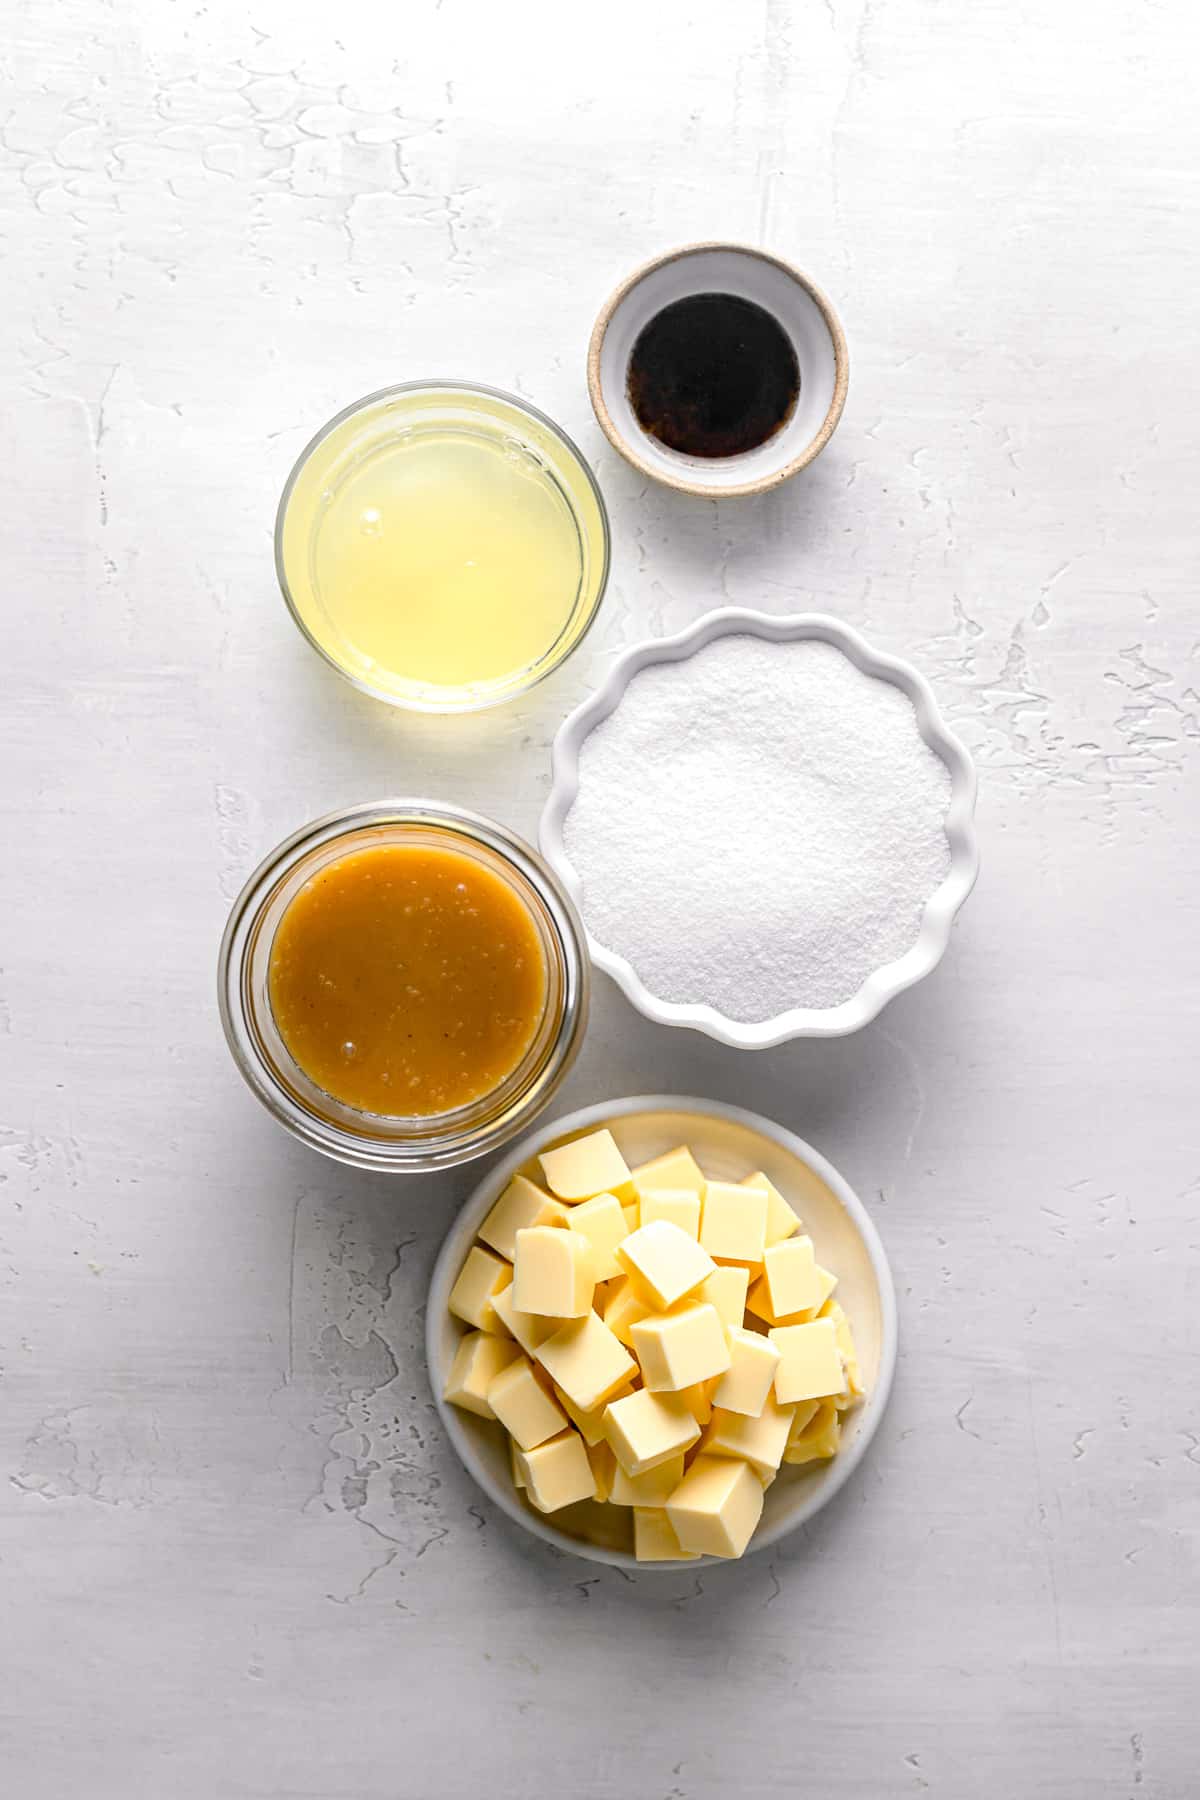 ingredients for the caramel swiss meringue buttercream